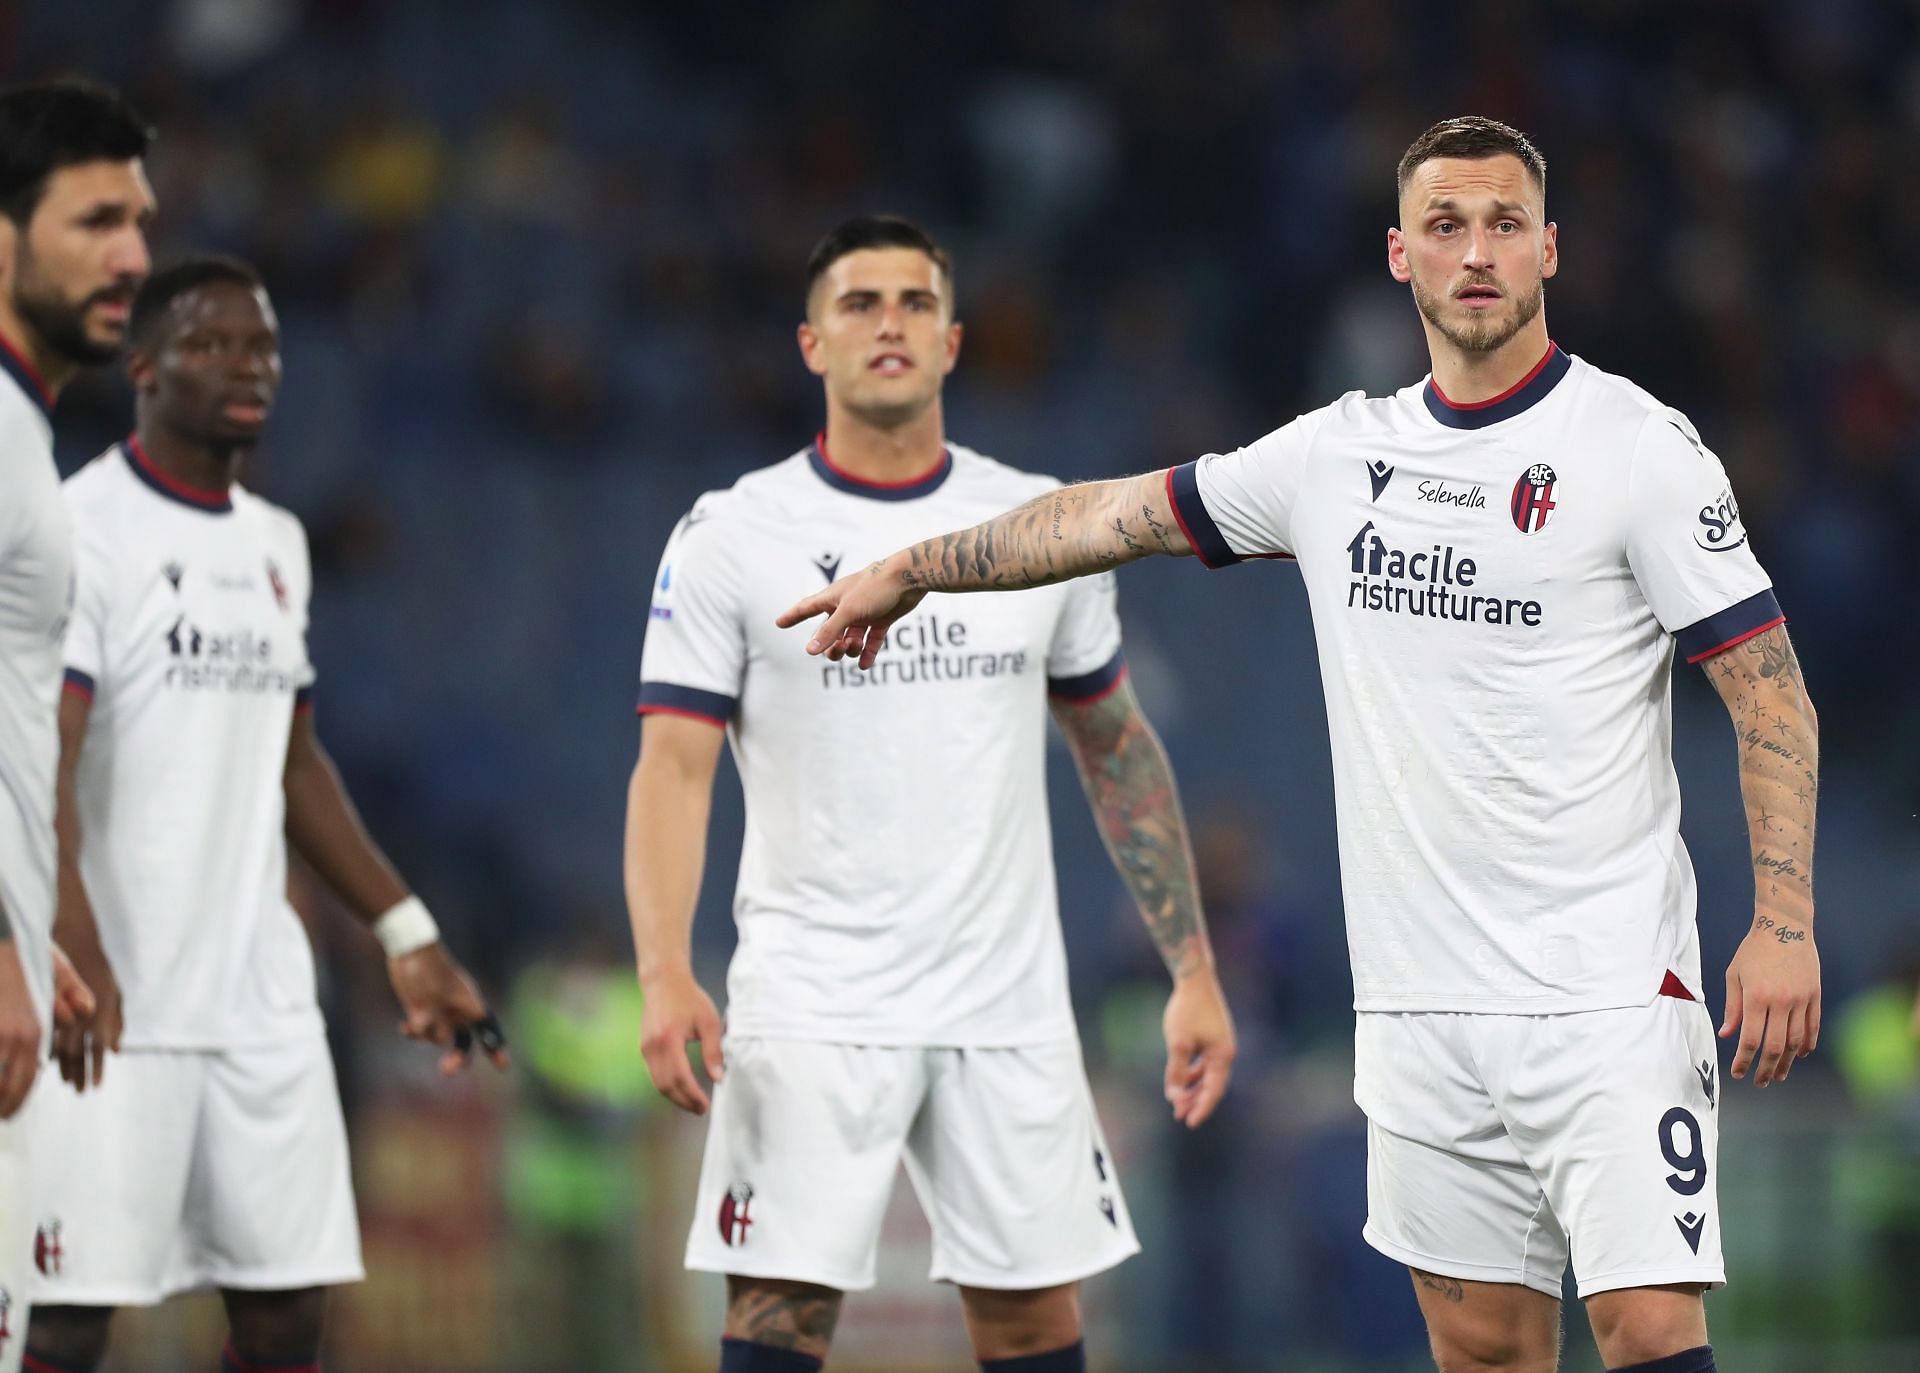 Bologna play Venezia on Sunday in Serie A